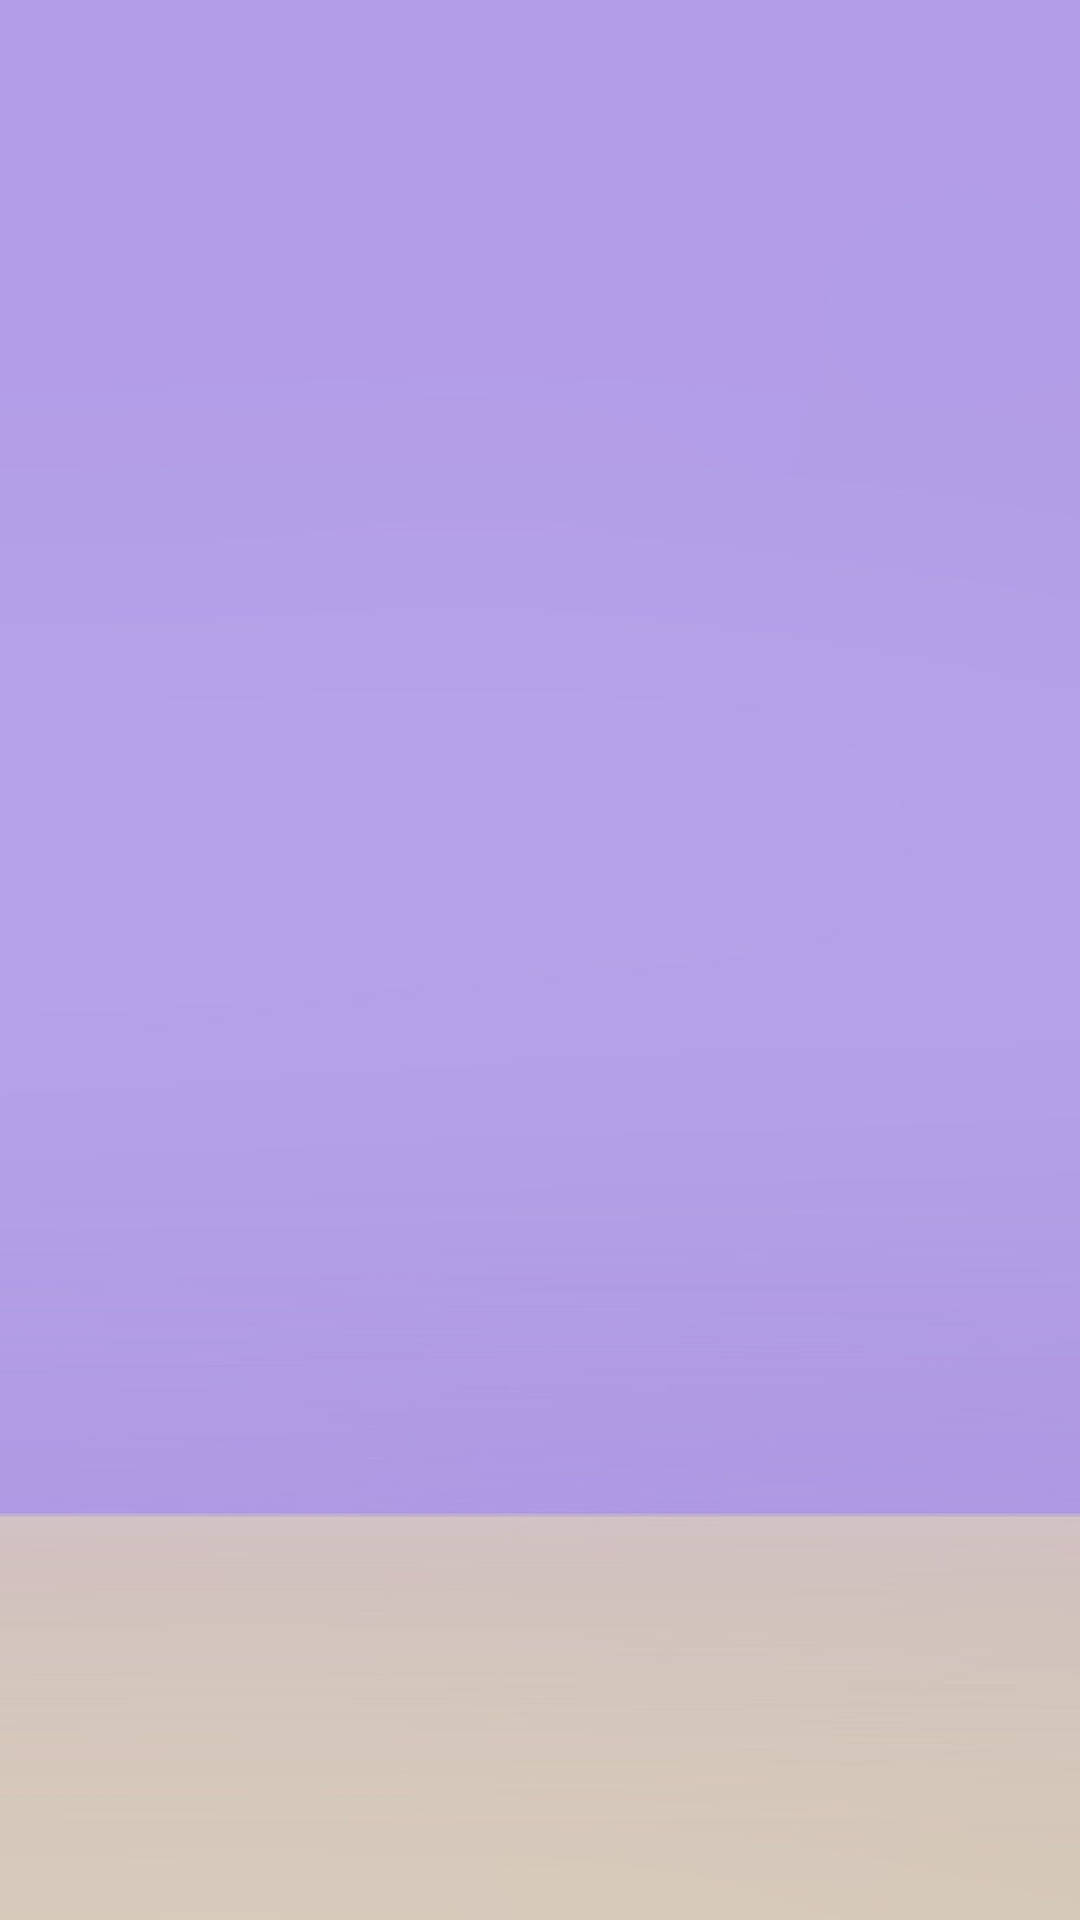 Light Purple Iphone With White Bottom Wallpaper